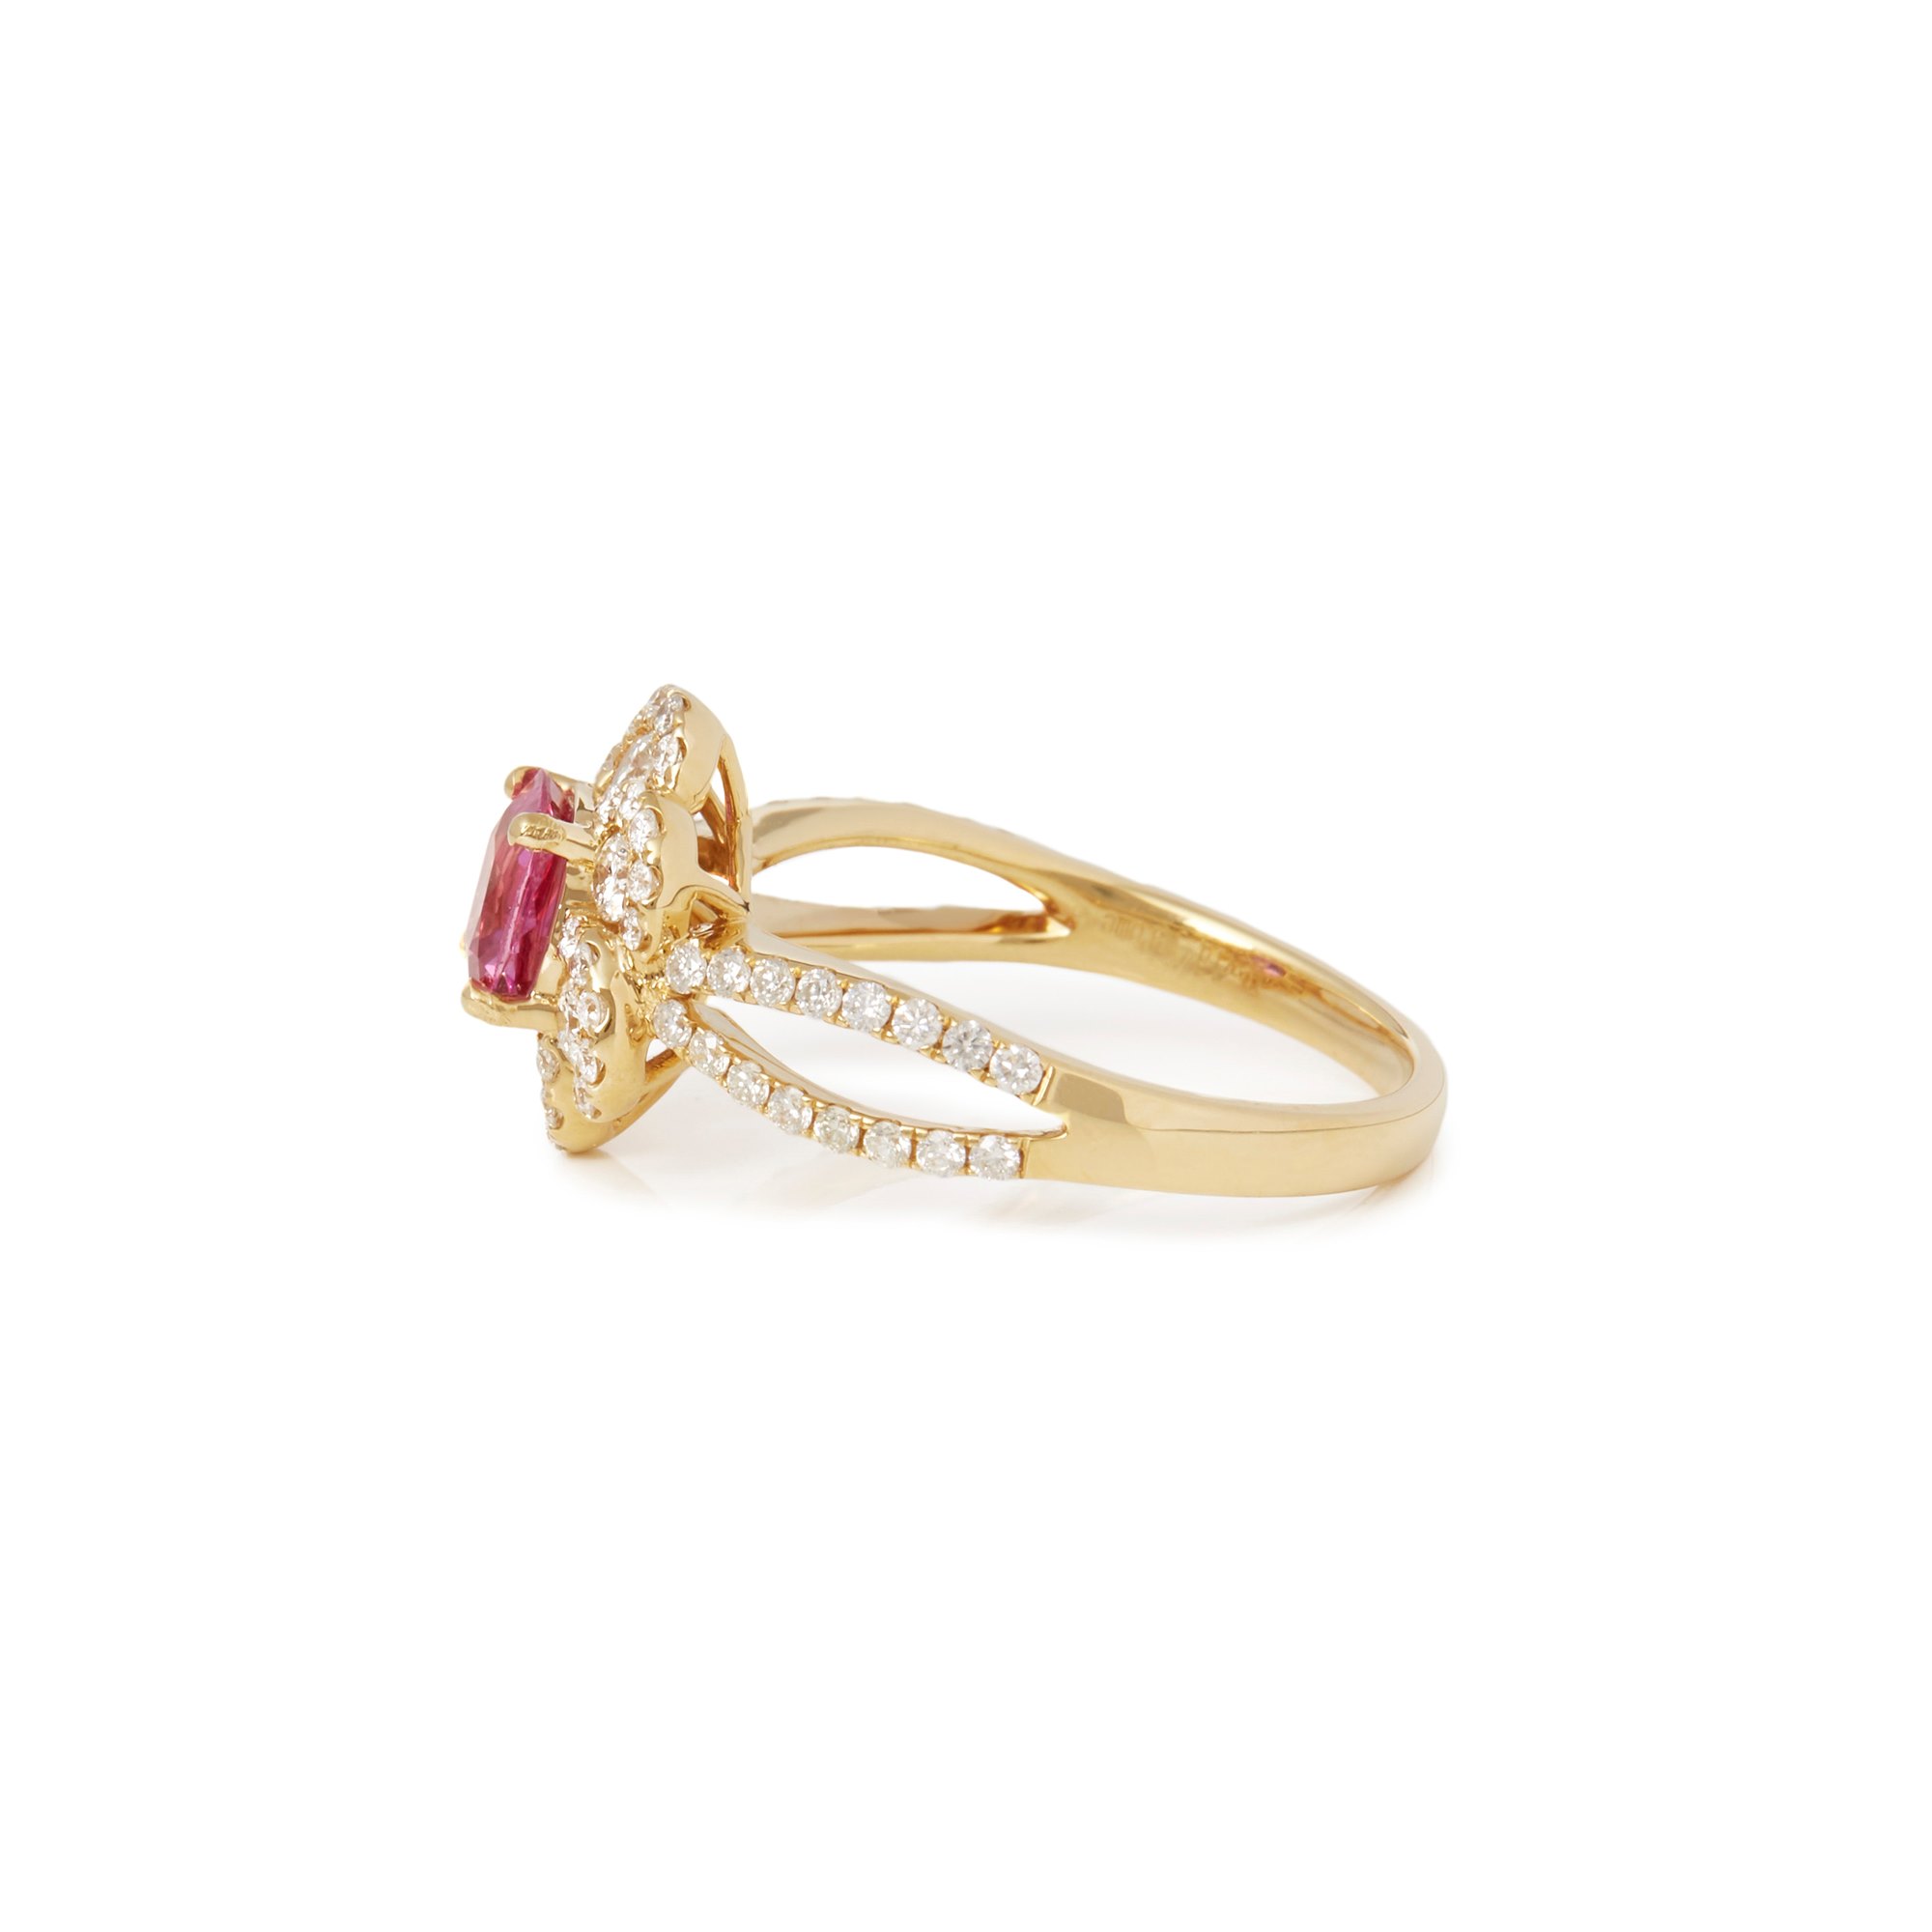 David Jerome 18k Yellow Gold Pink Sapphire and Diamond Ring